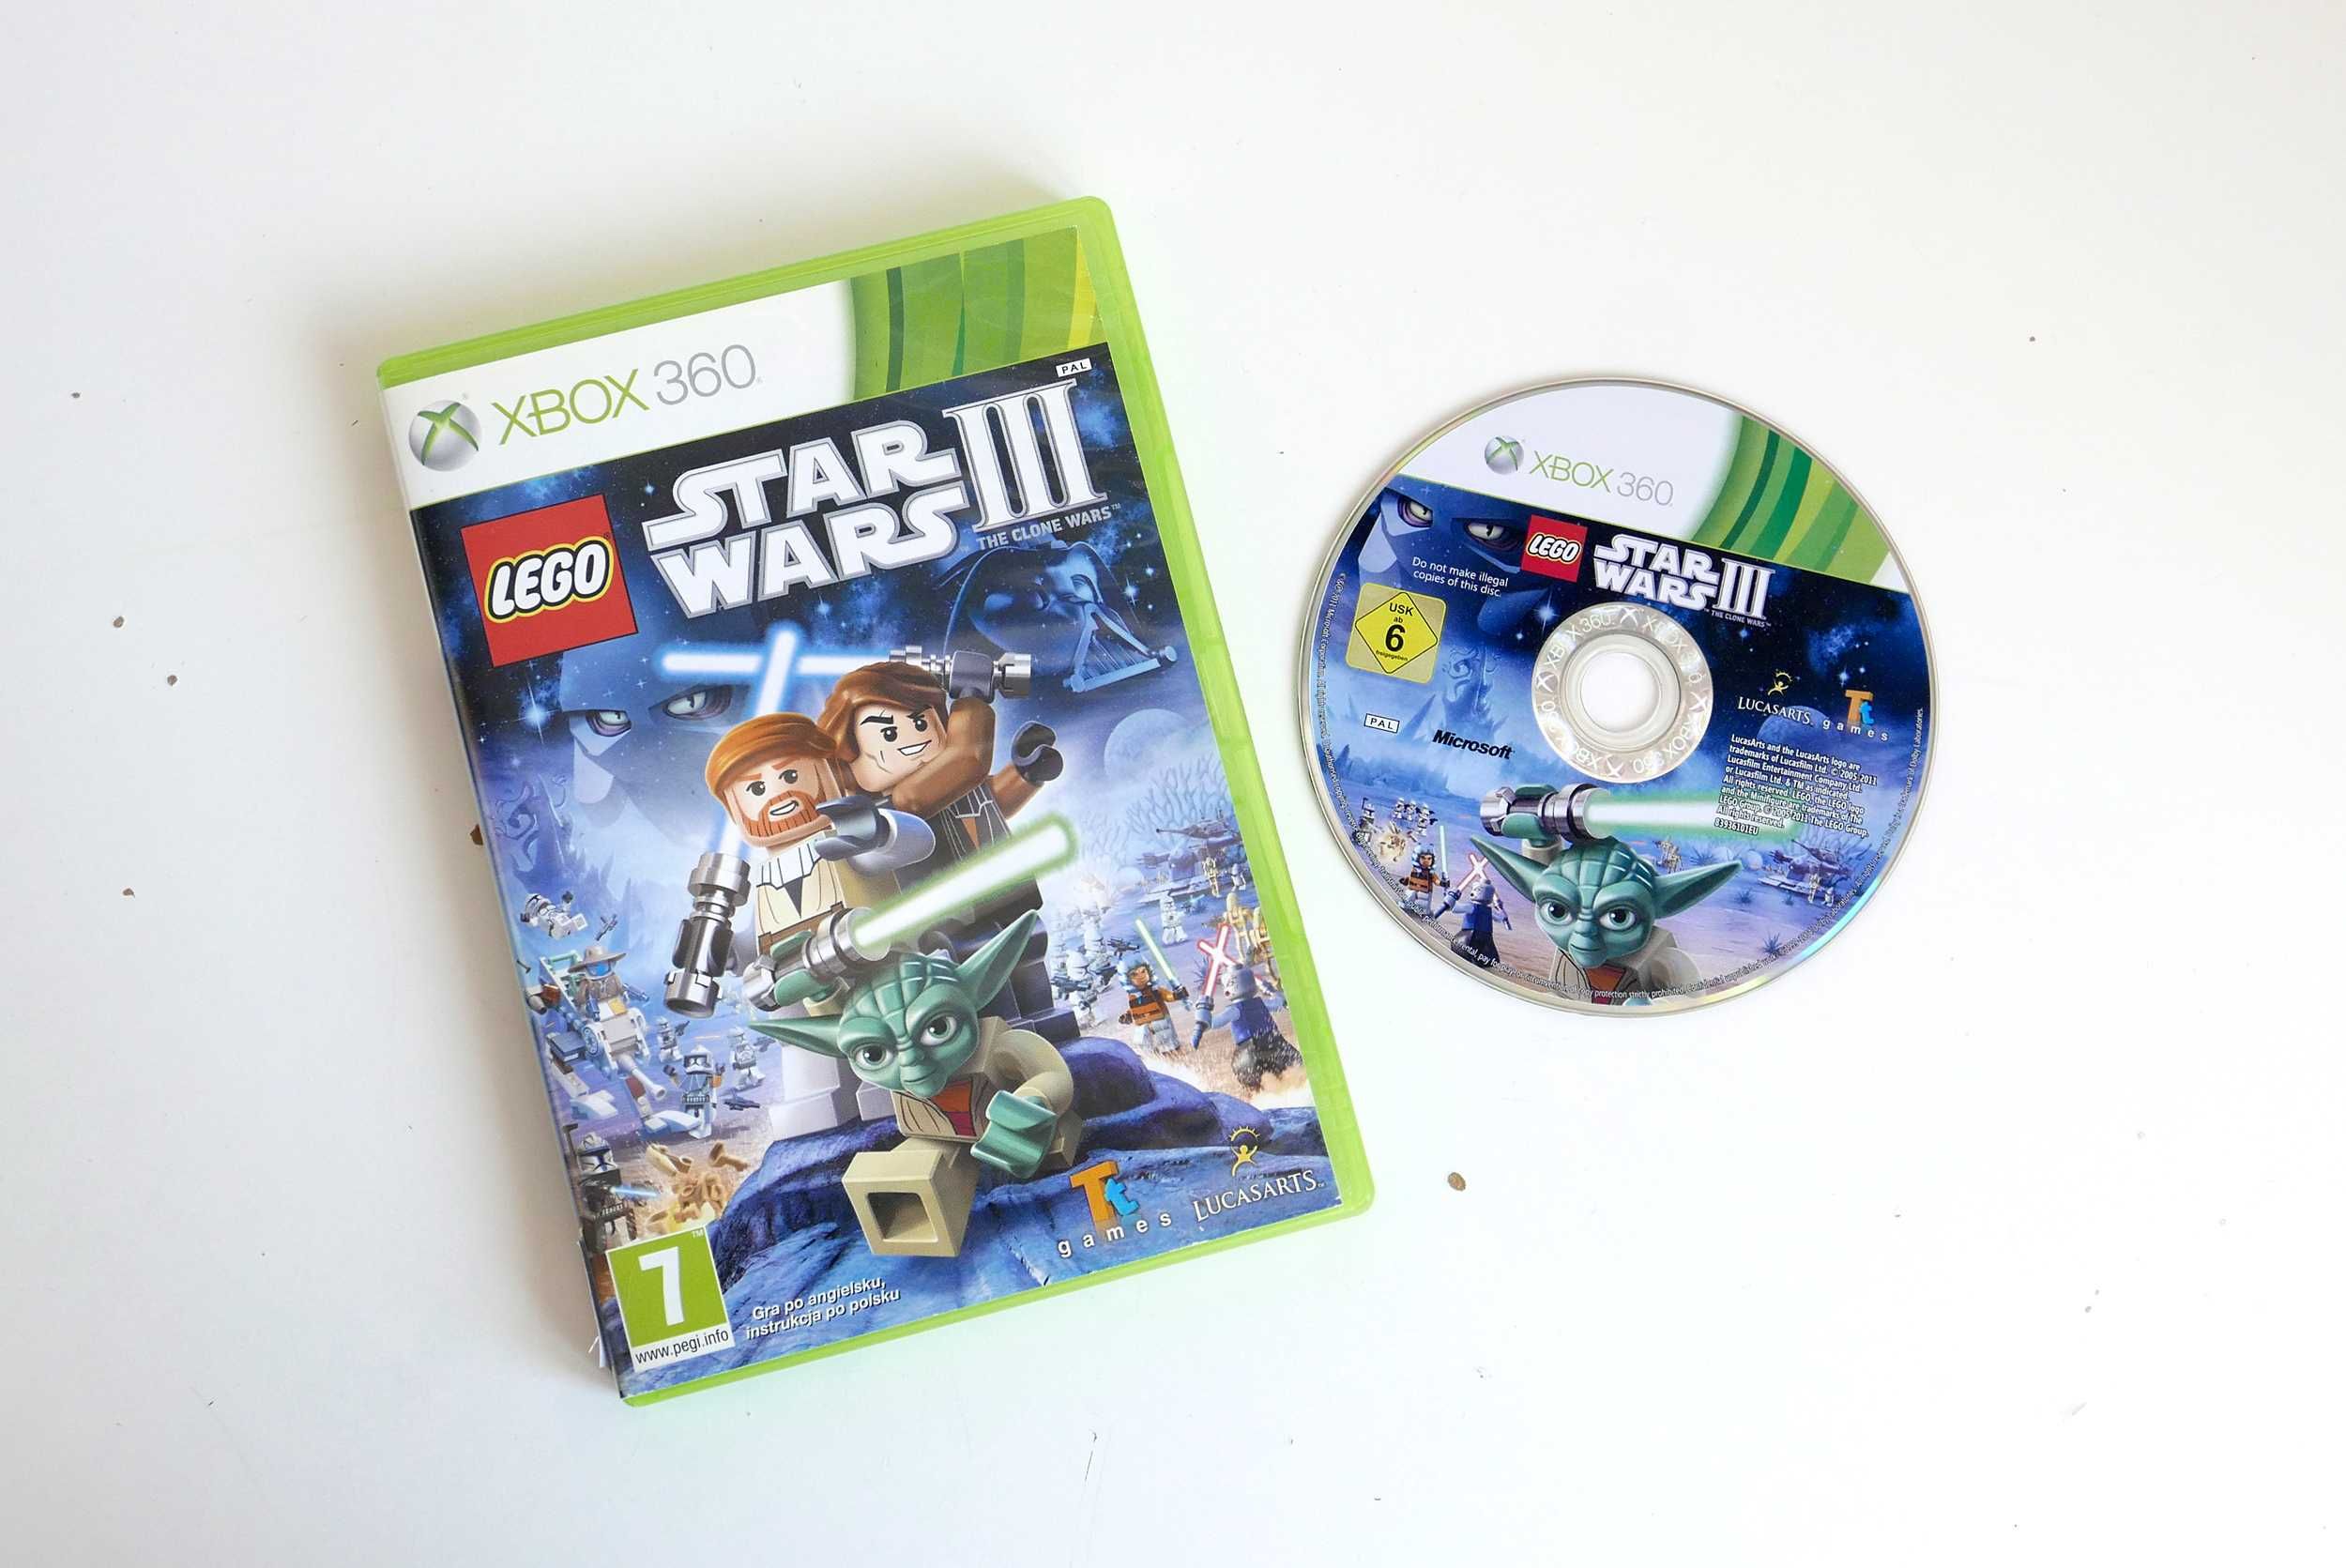 LEGO Star Wars III - The Clone Wars XBOX 360